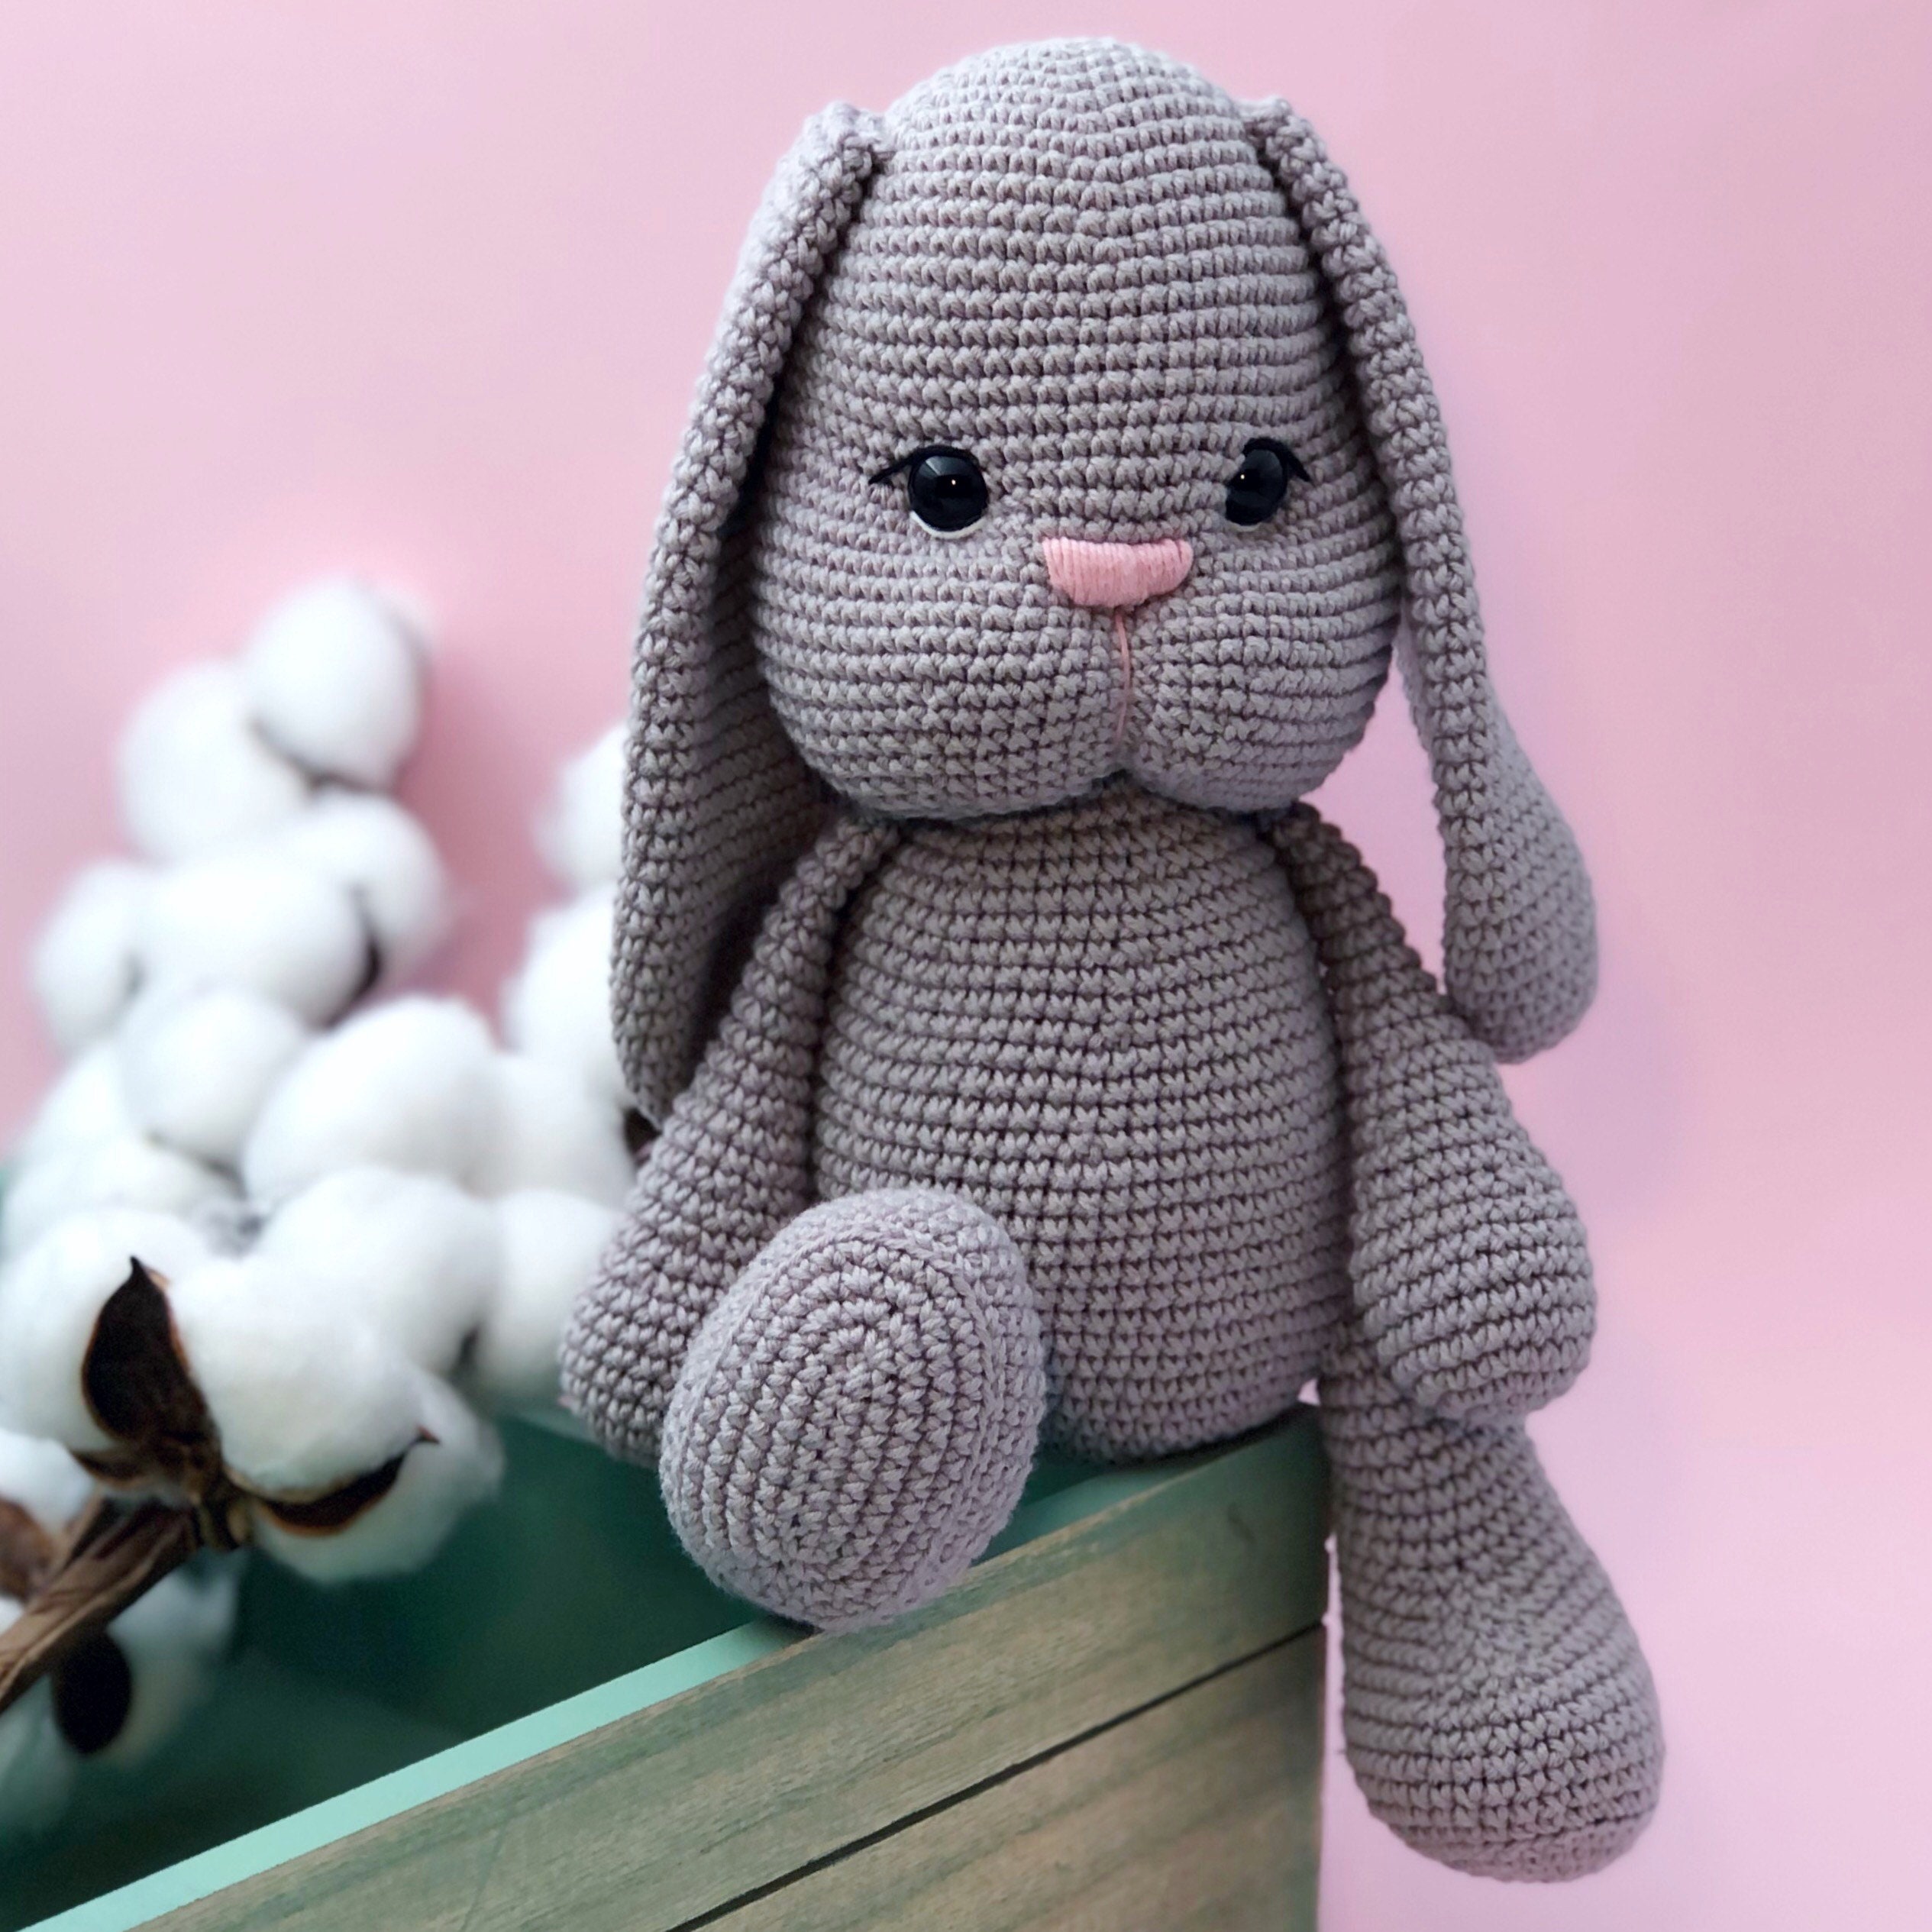 FREE crochet pattern – Stuffed animal, big eared Bunny